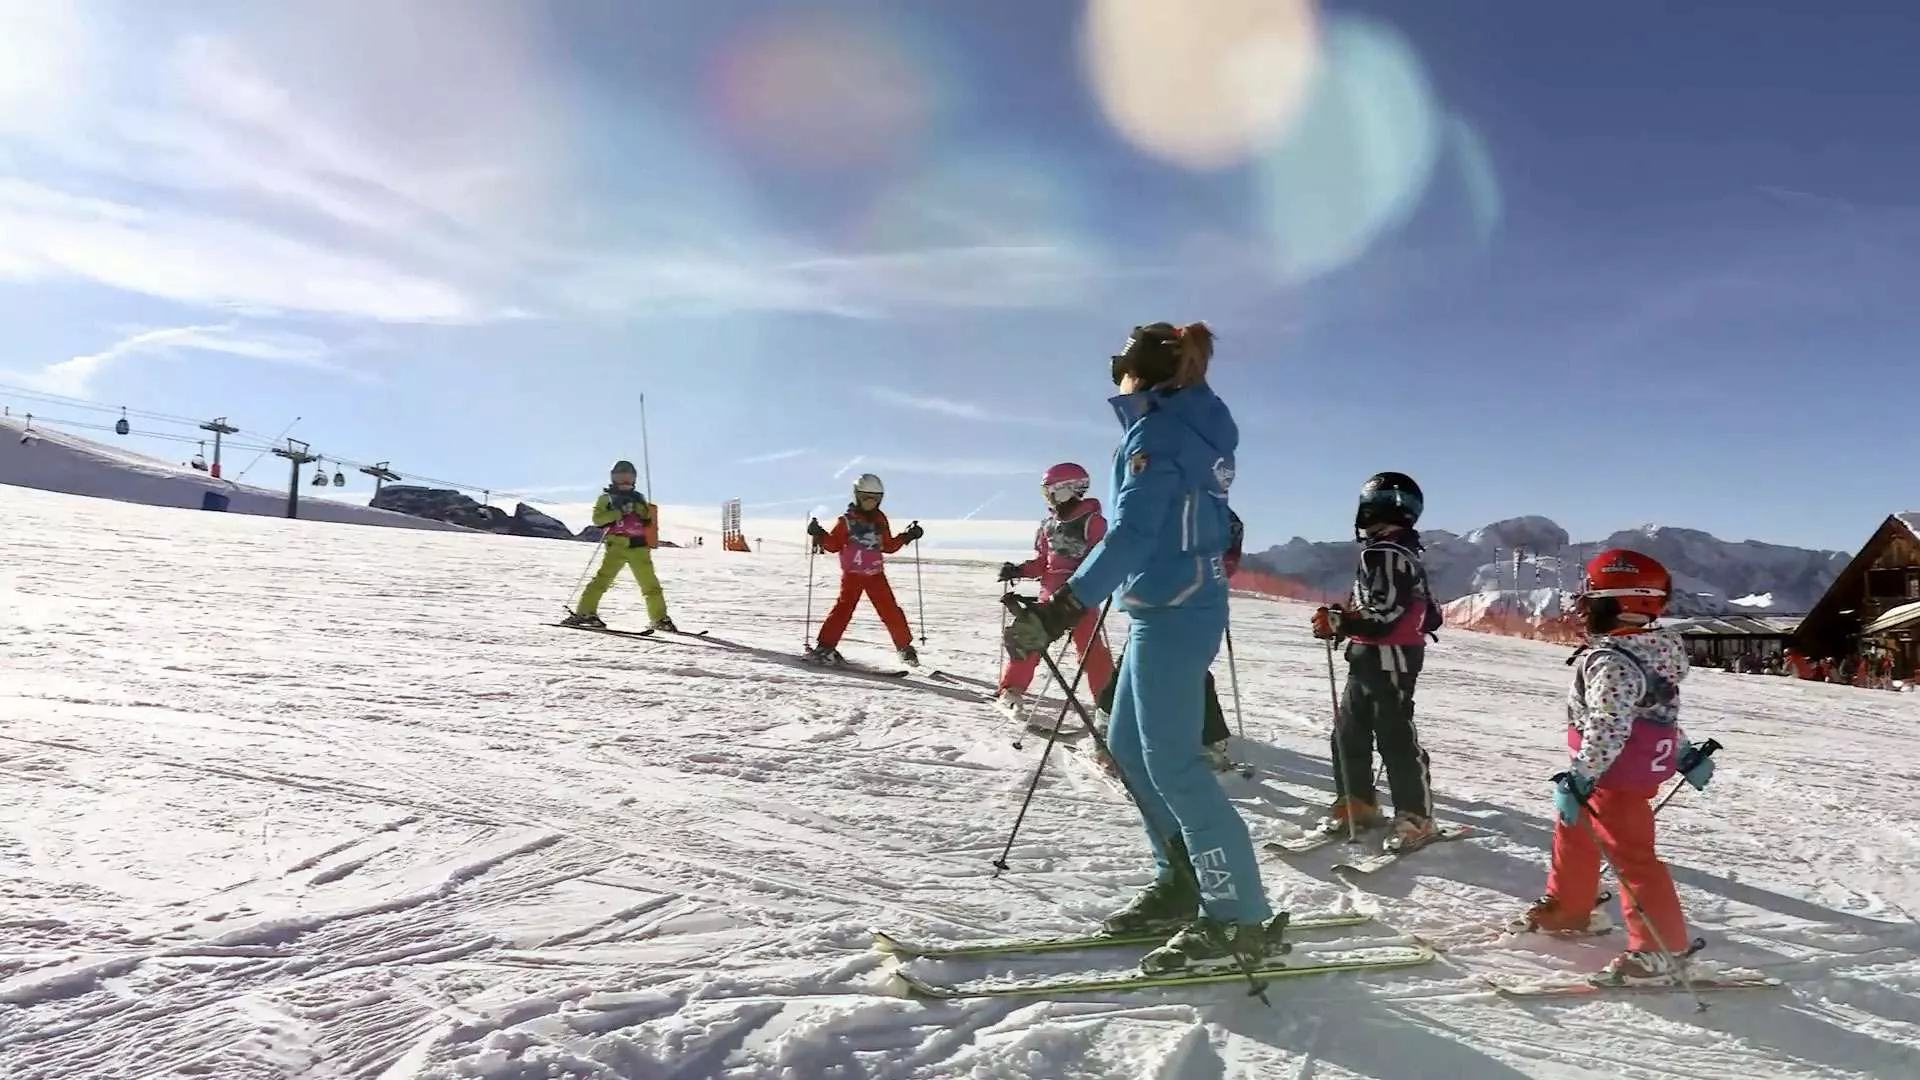 Ski School Canazei Marmolada in Italy, Europe | Snowboarding,Skiing - Rated 0.7